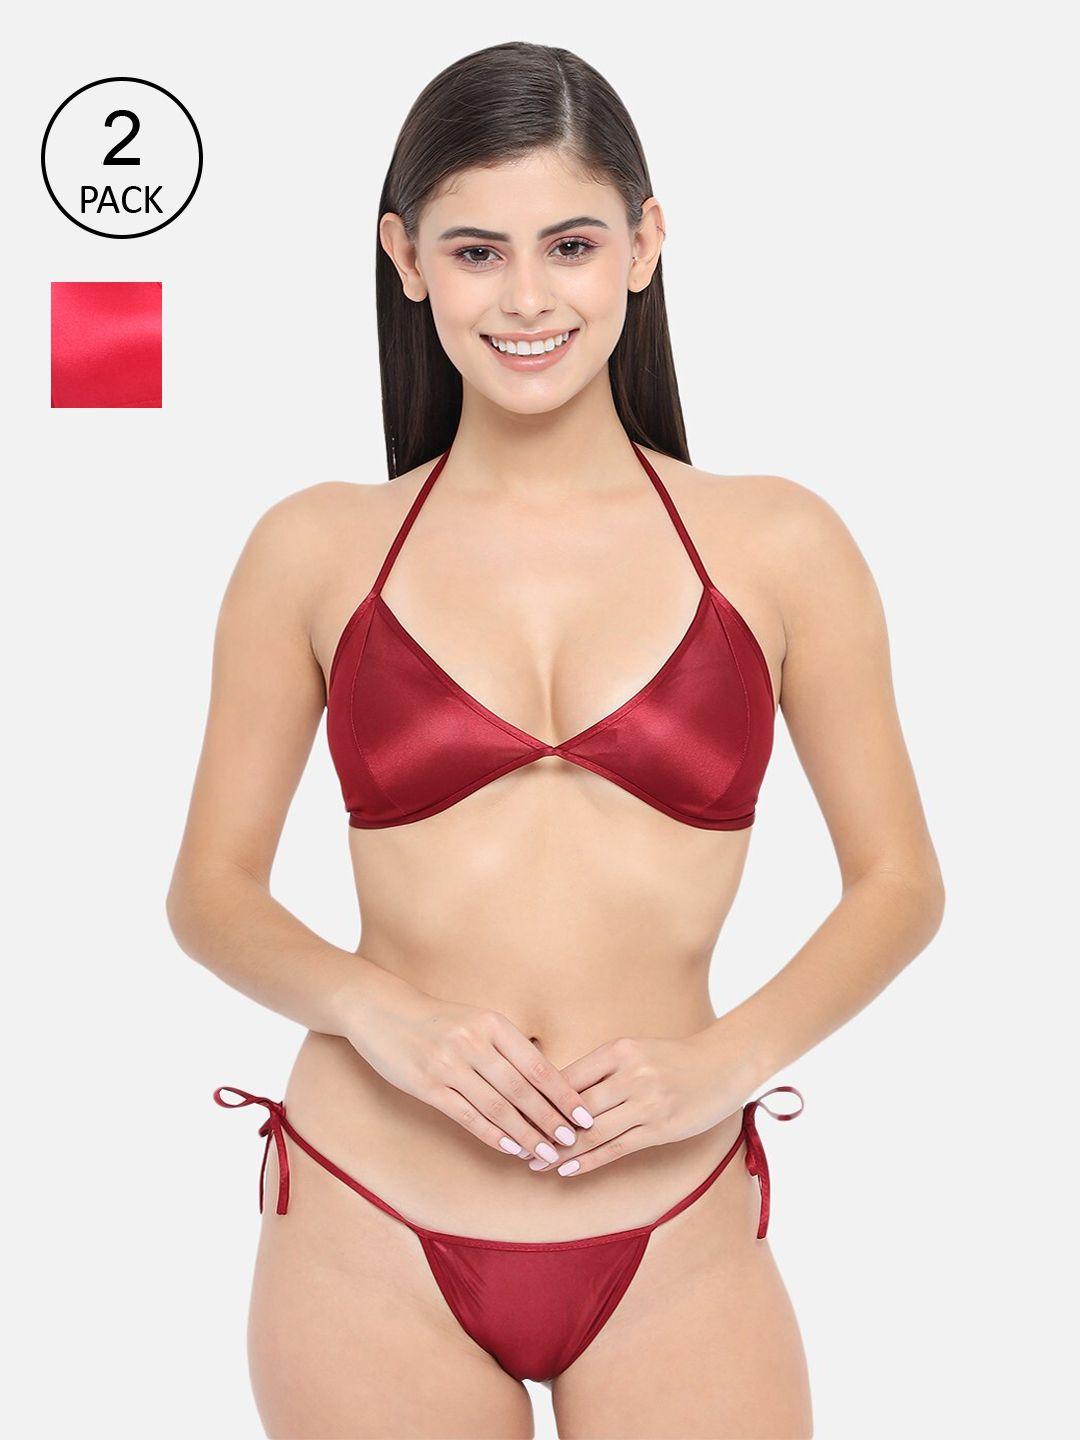 klamotten-women-pack-of-2-red-&-maroon-solid-lingerie-set